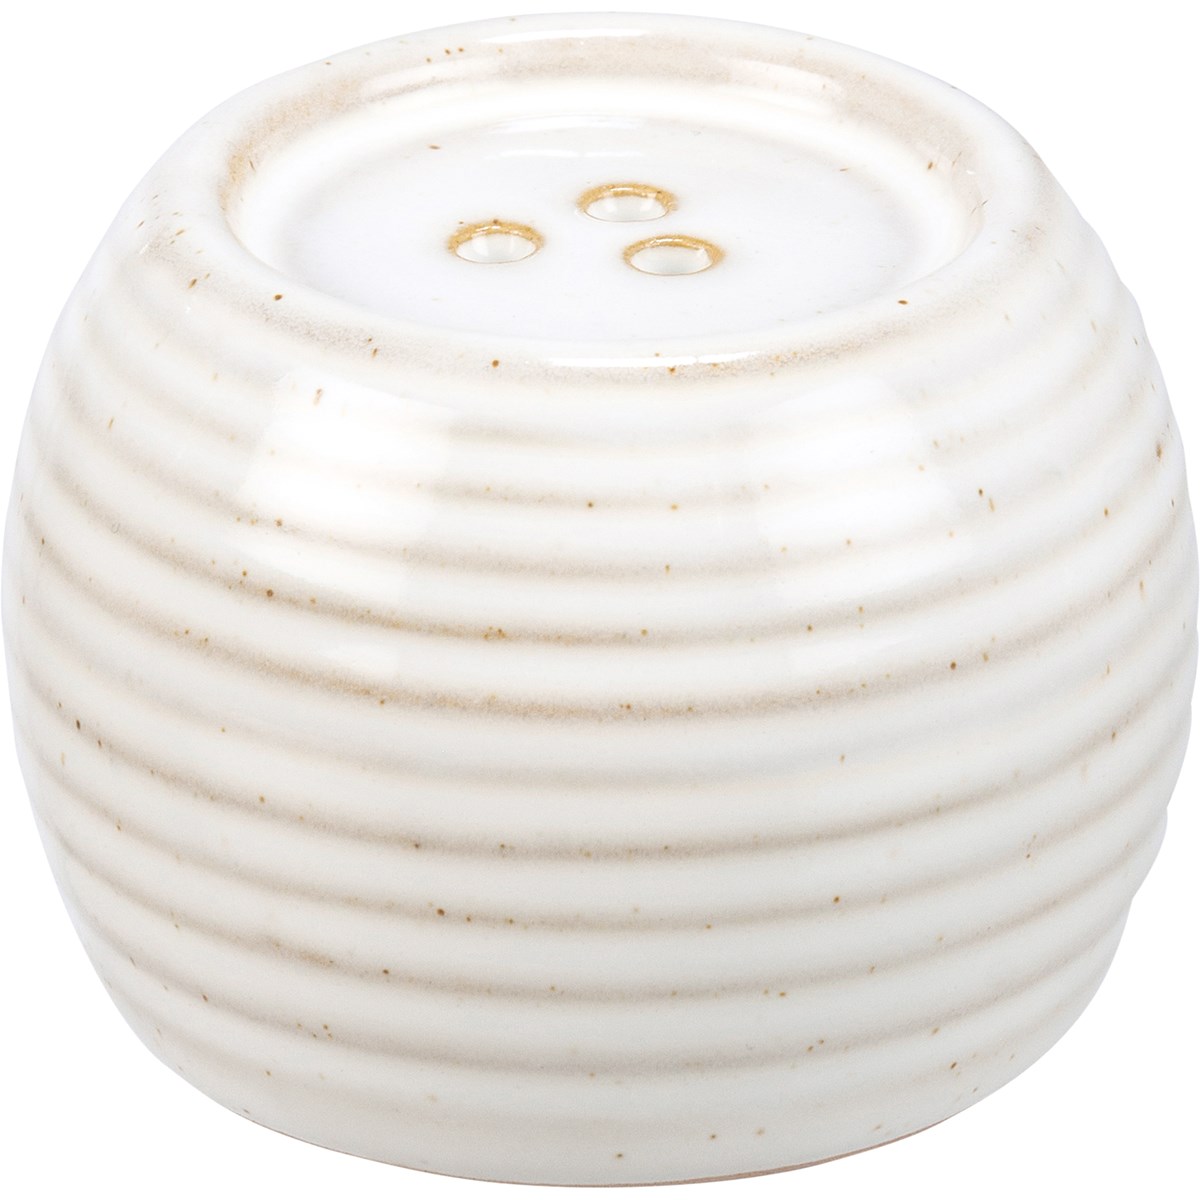 Snowman Salt and Pepper Shakers - Stoneware, Plastic